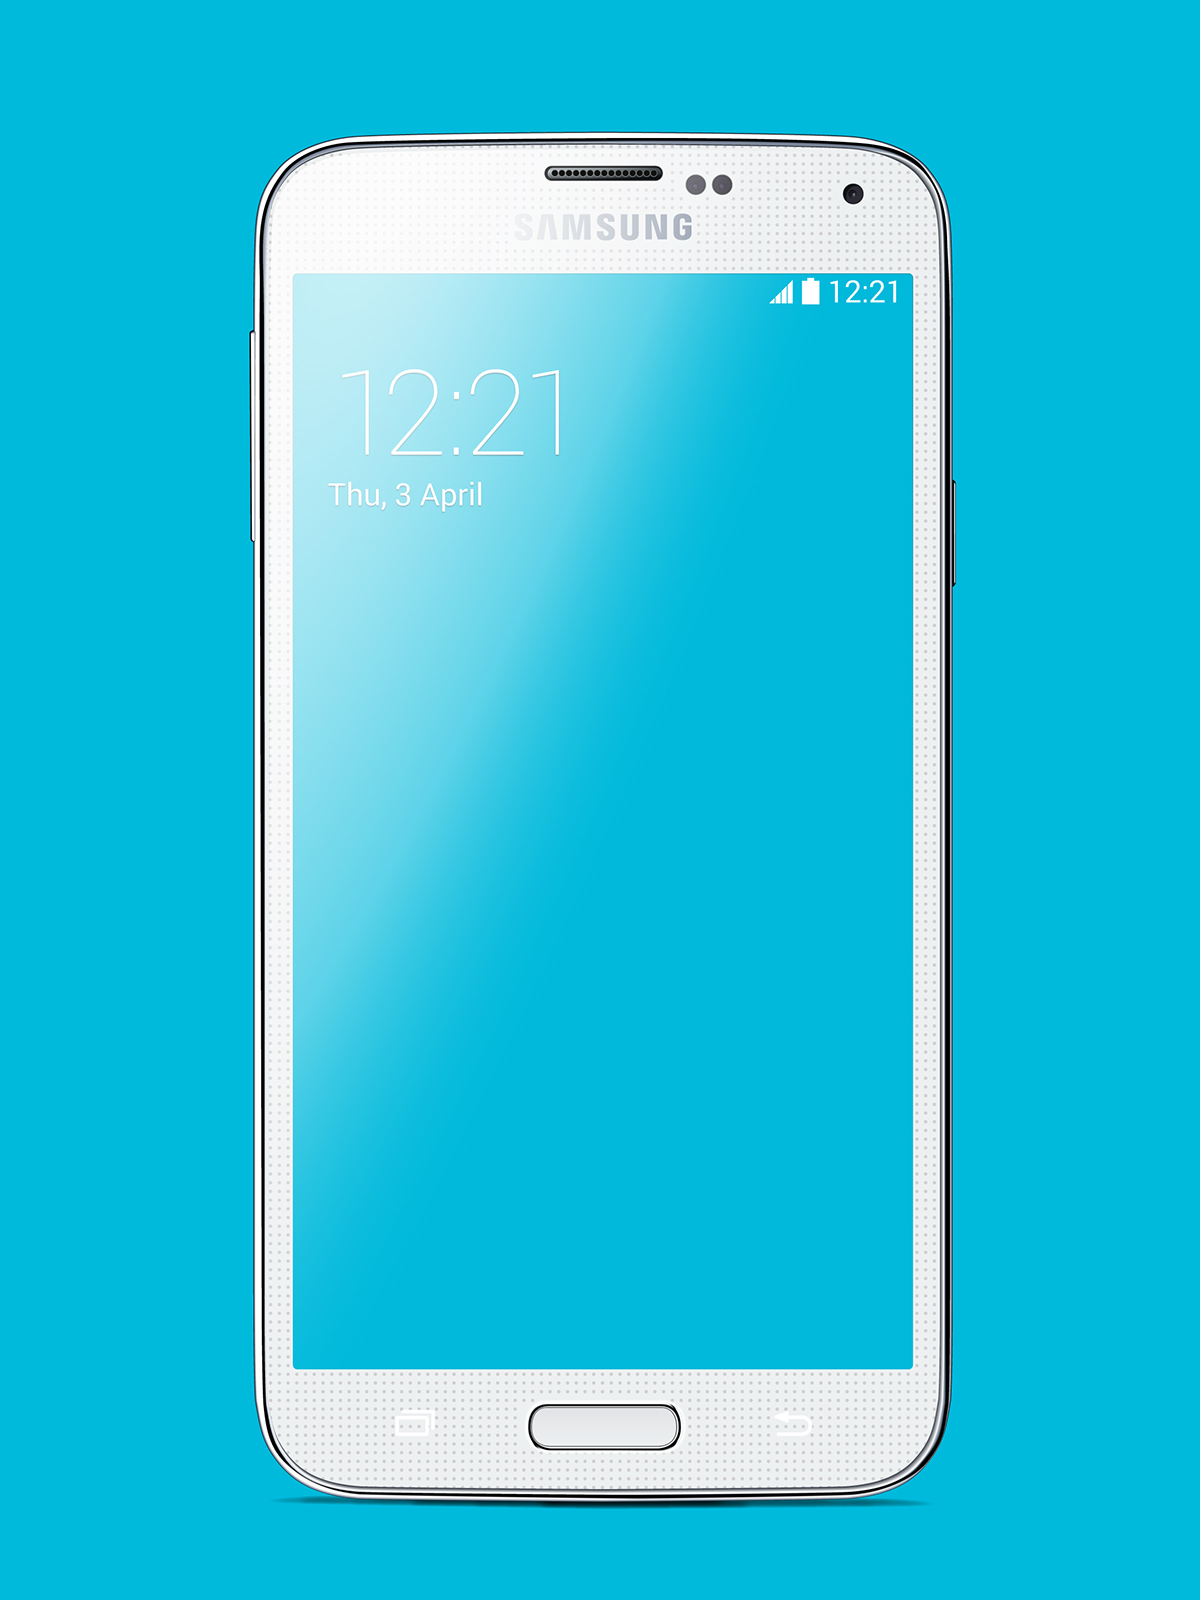 Mockup smartphone Samsung galaxy Galaxy S5 Samsung Galaxy s5 freebie free download mockups resources